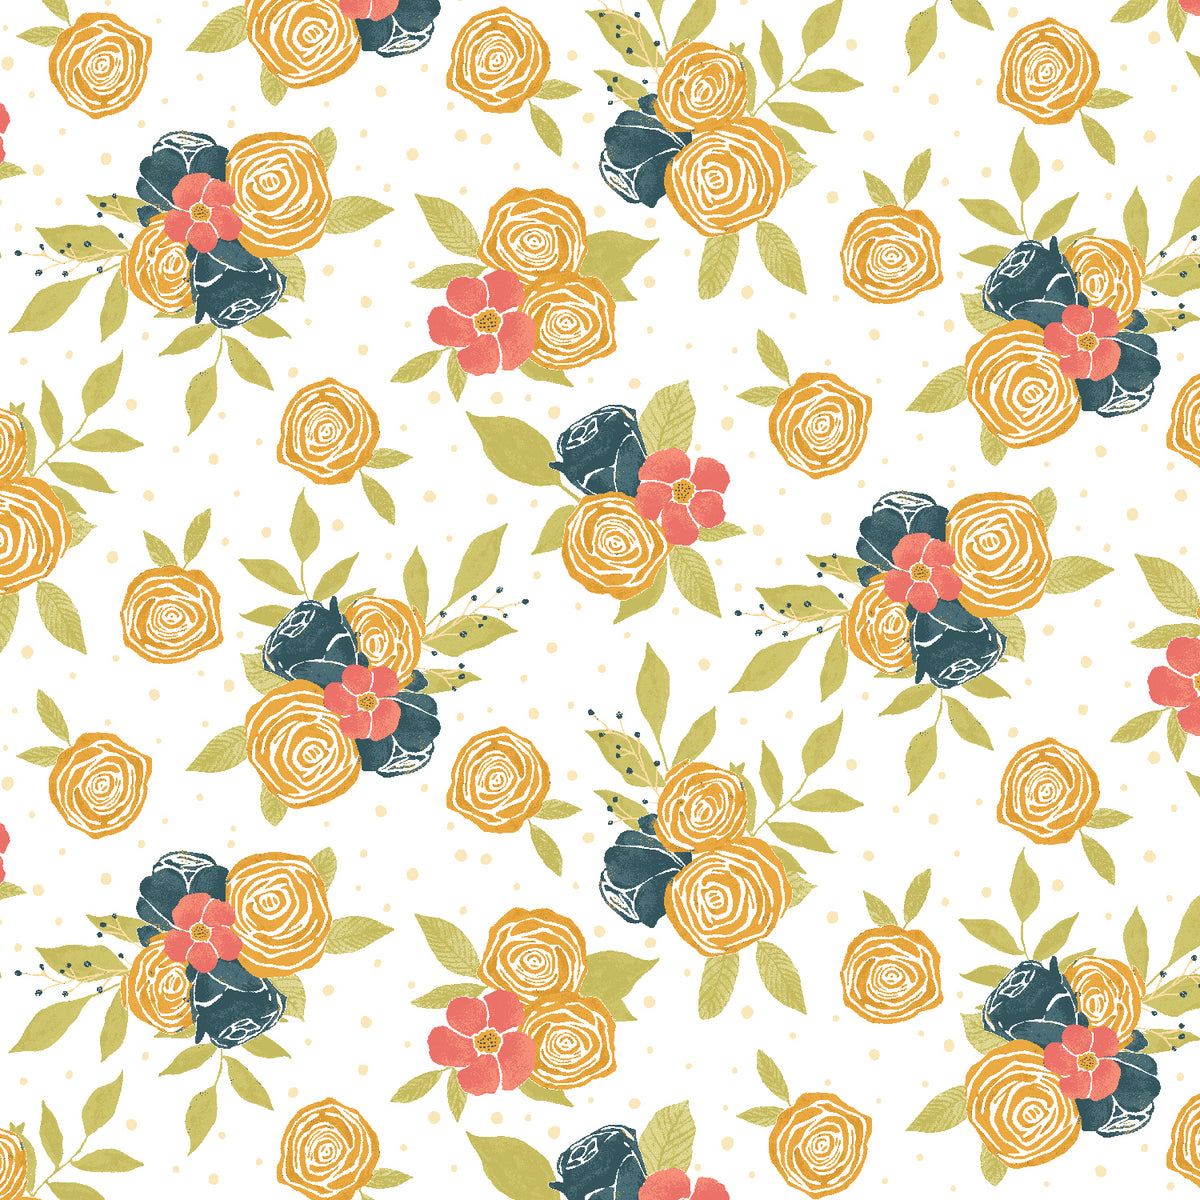 Moonlight Garden Quilt Fabric - Corsage Medium Floral in Tisane Yellow - RJ5501-TI2